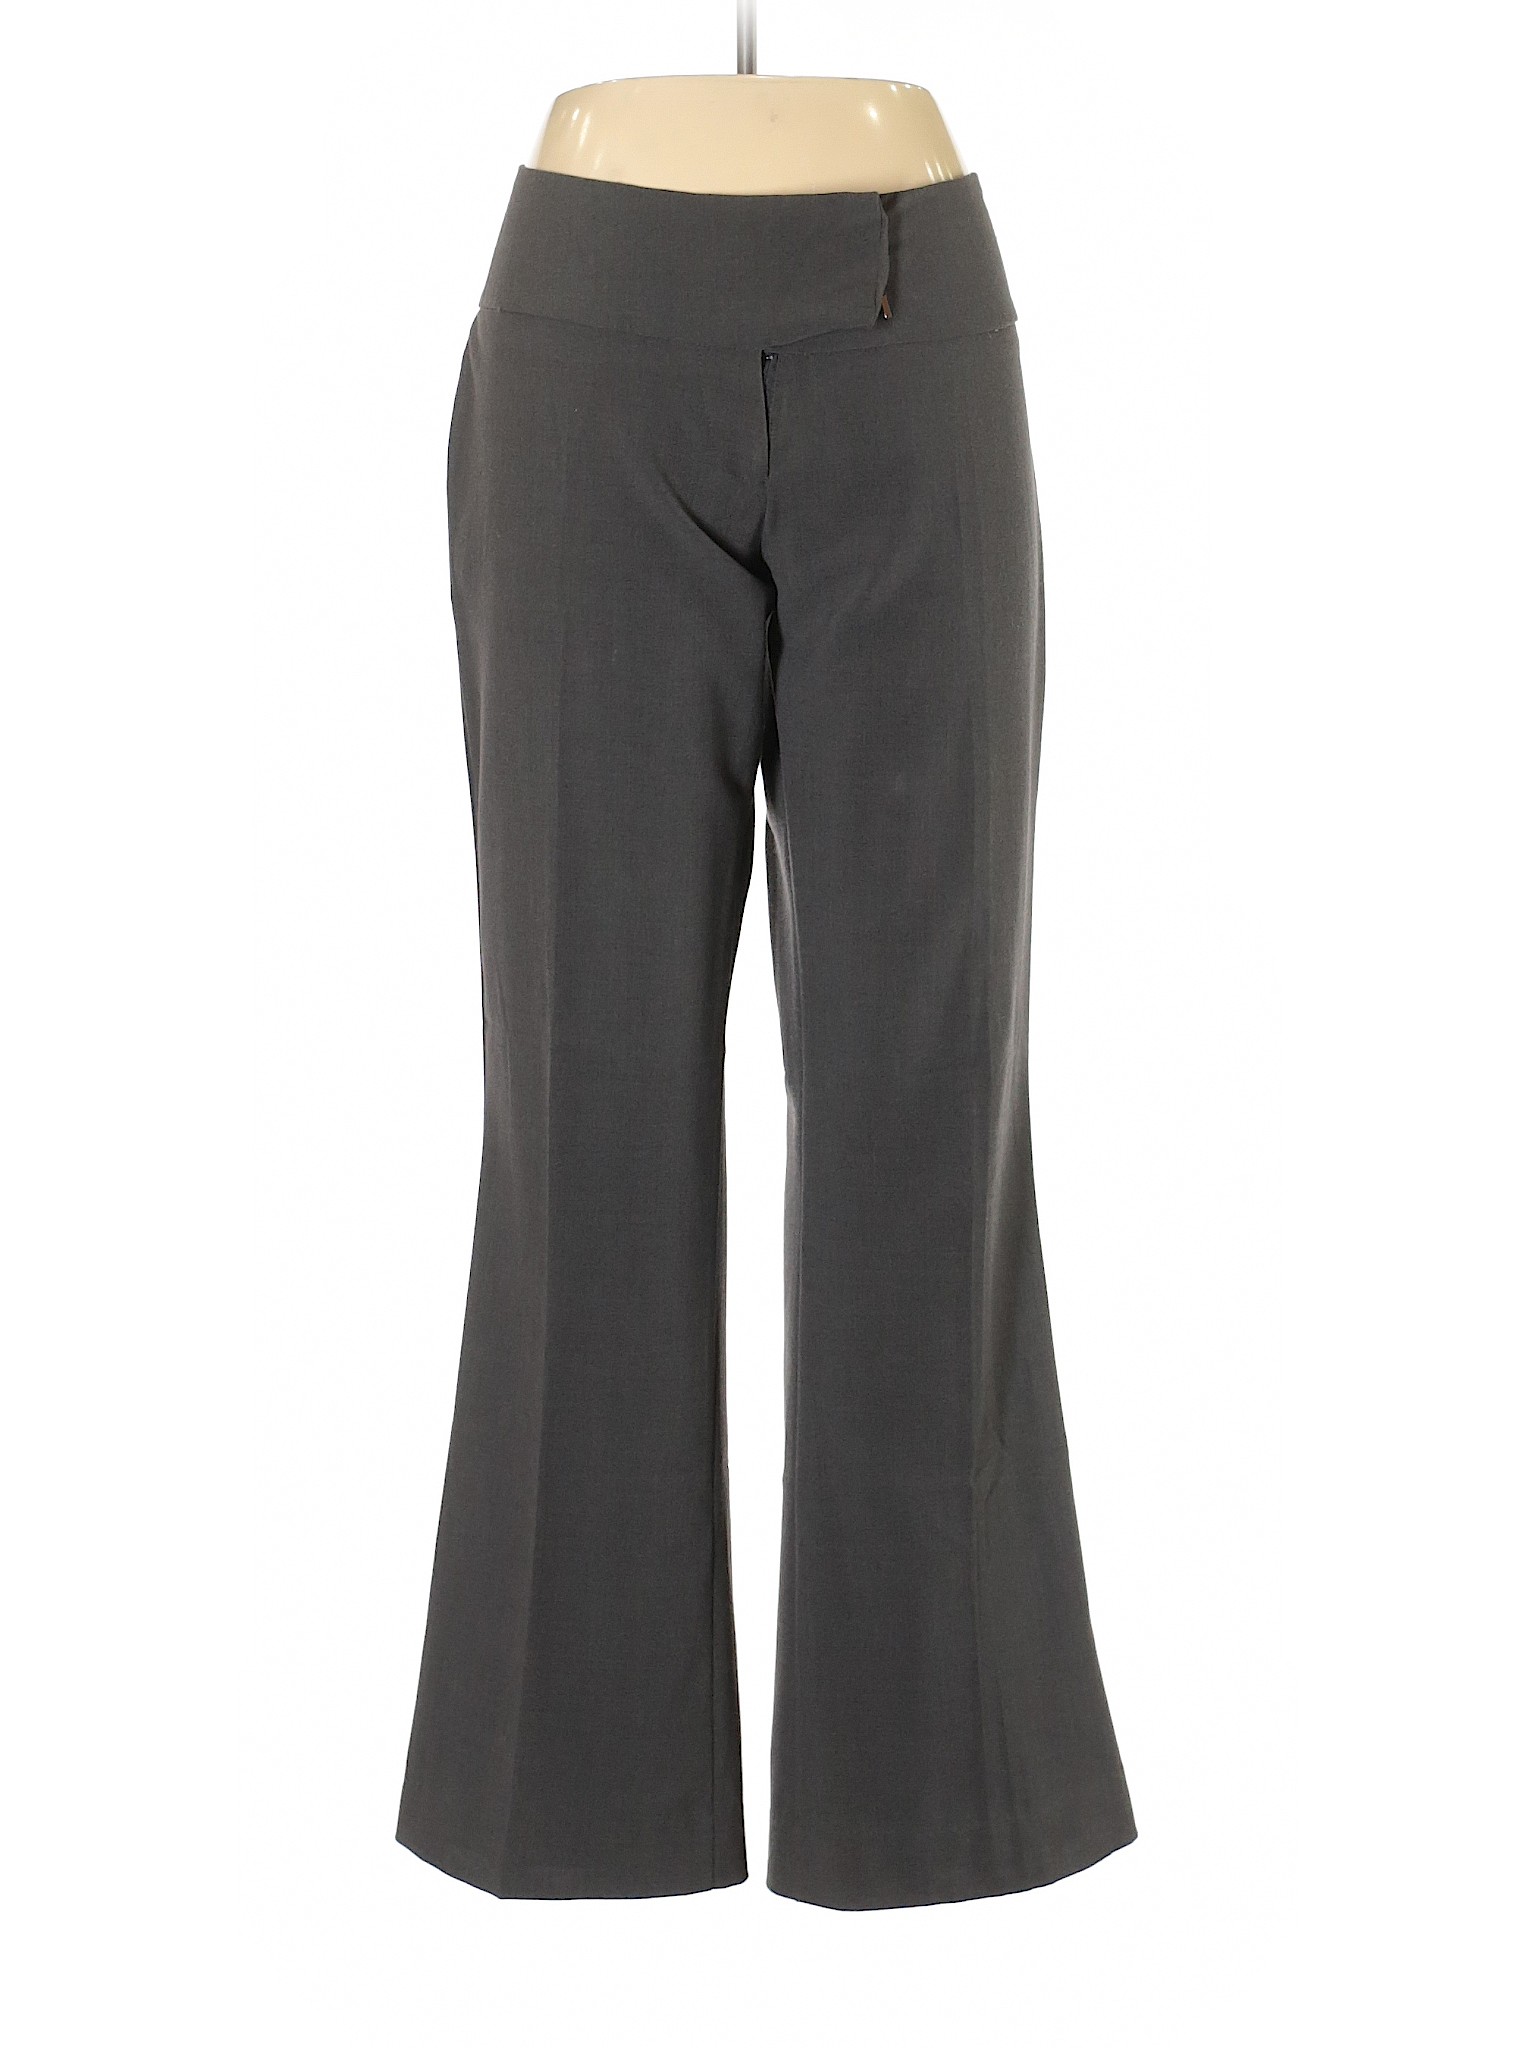 The Limited Women Gray Dress Pants 10 | eBay